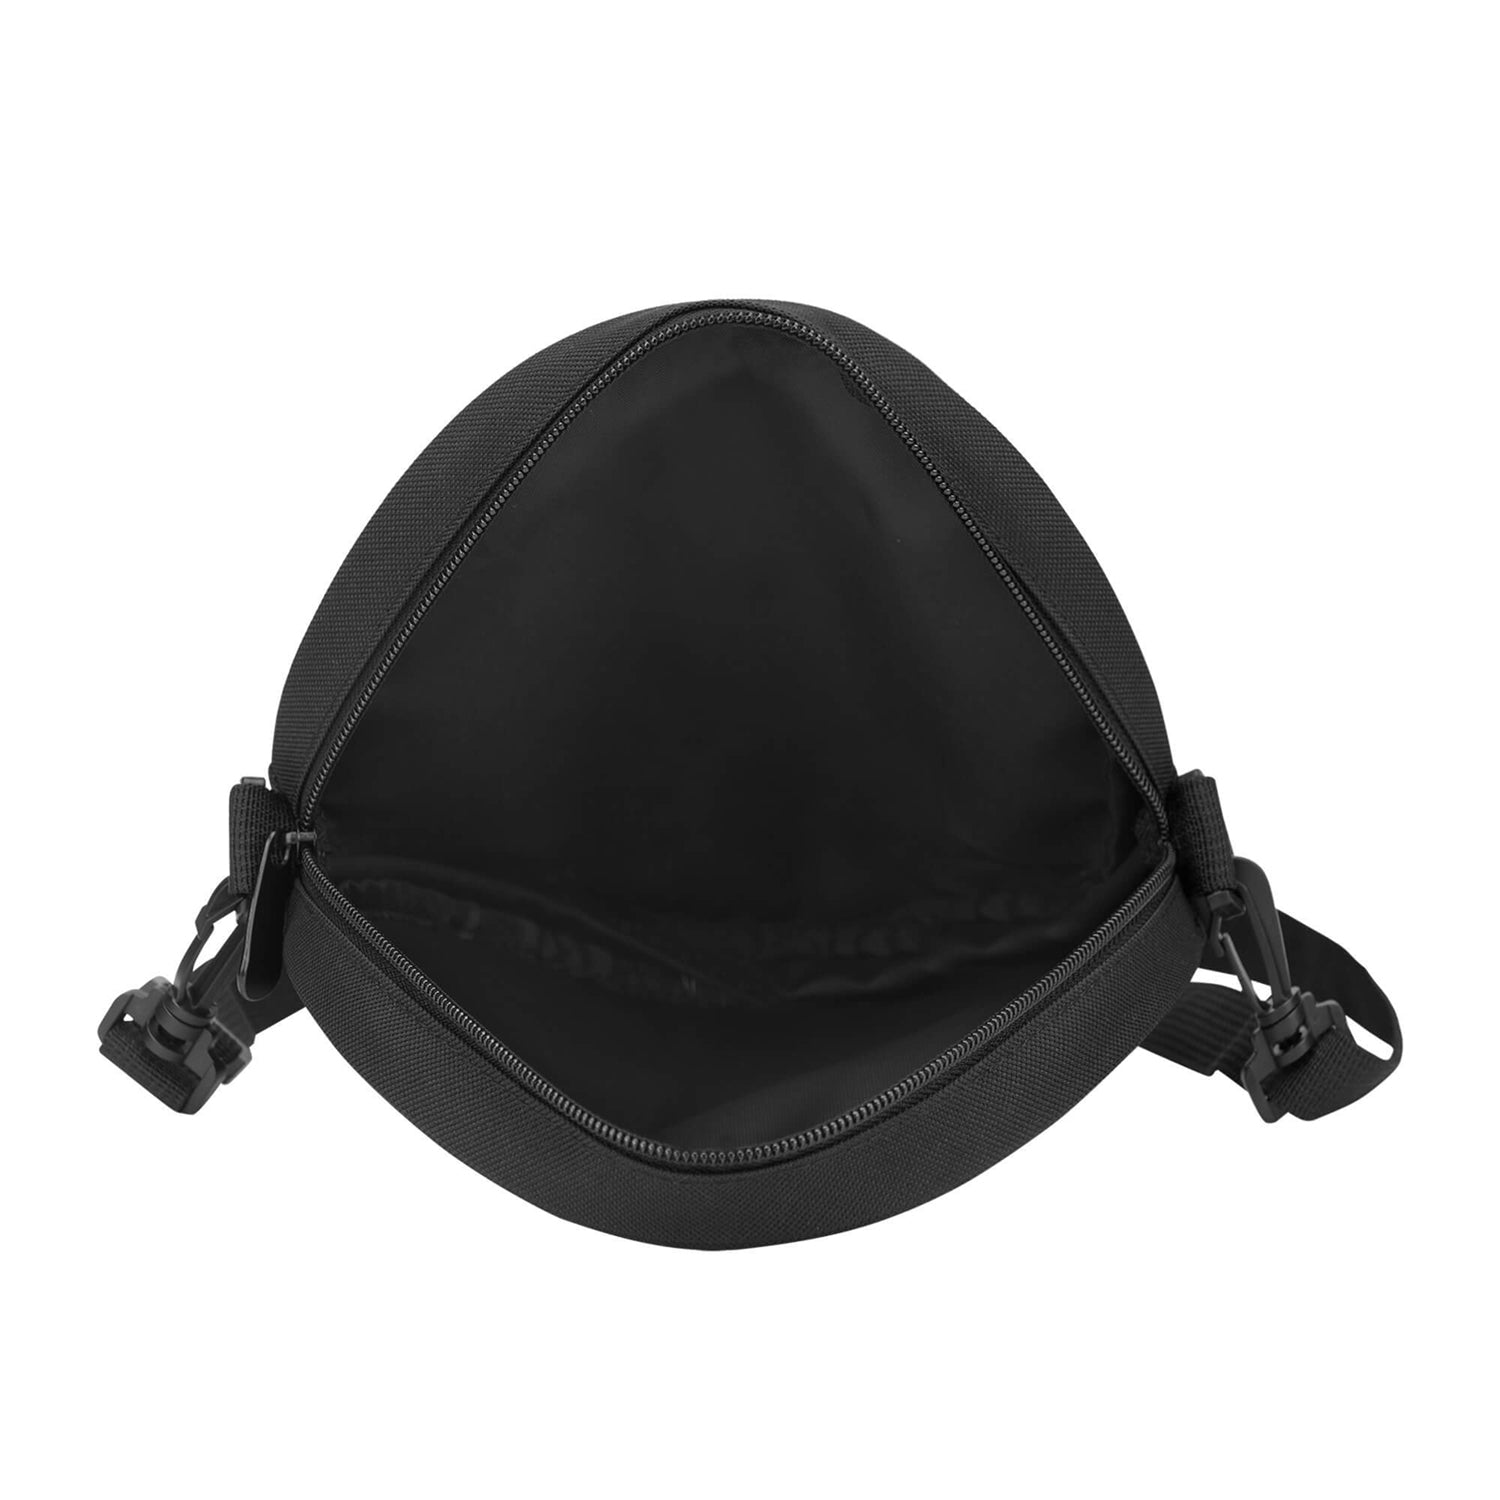 wotherspoon-tartan-round-satchel-bags